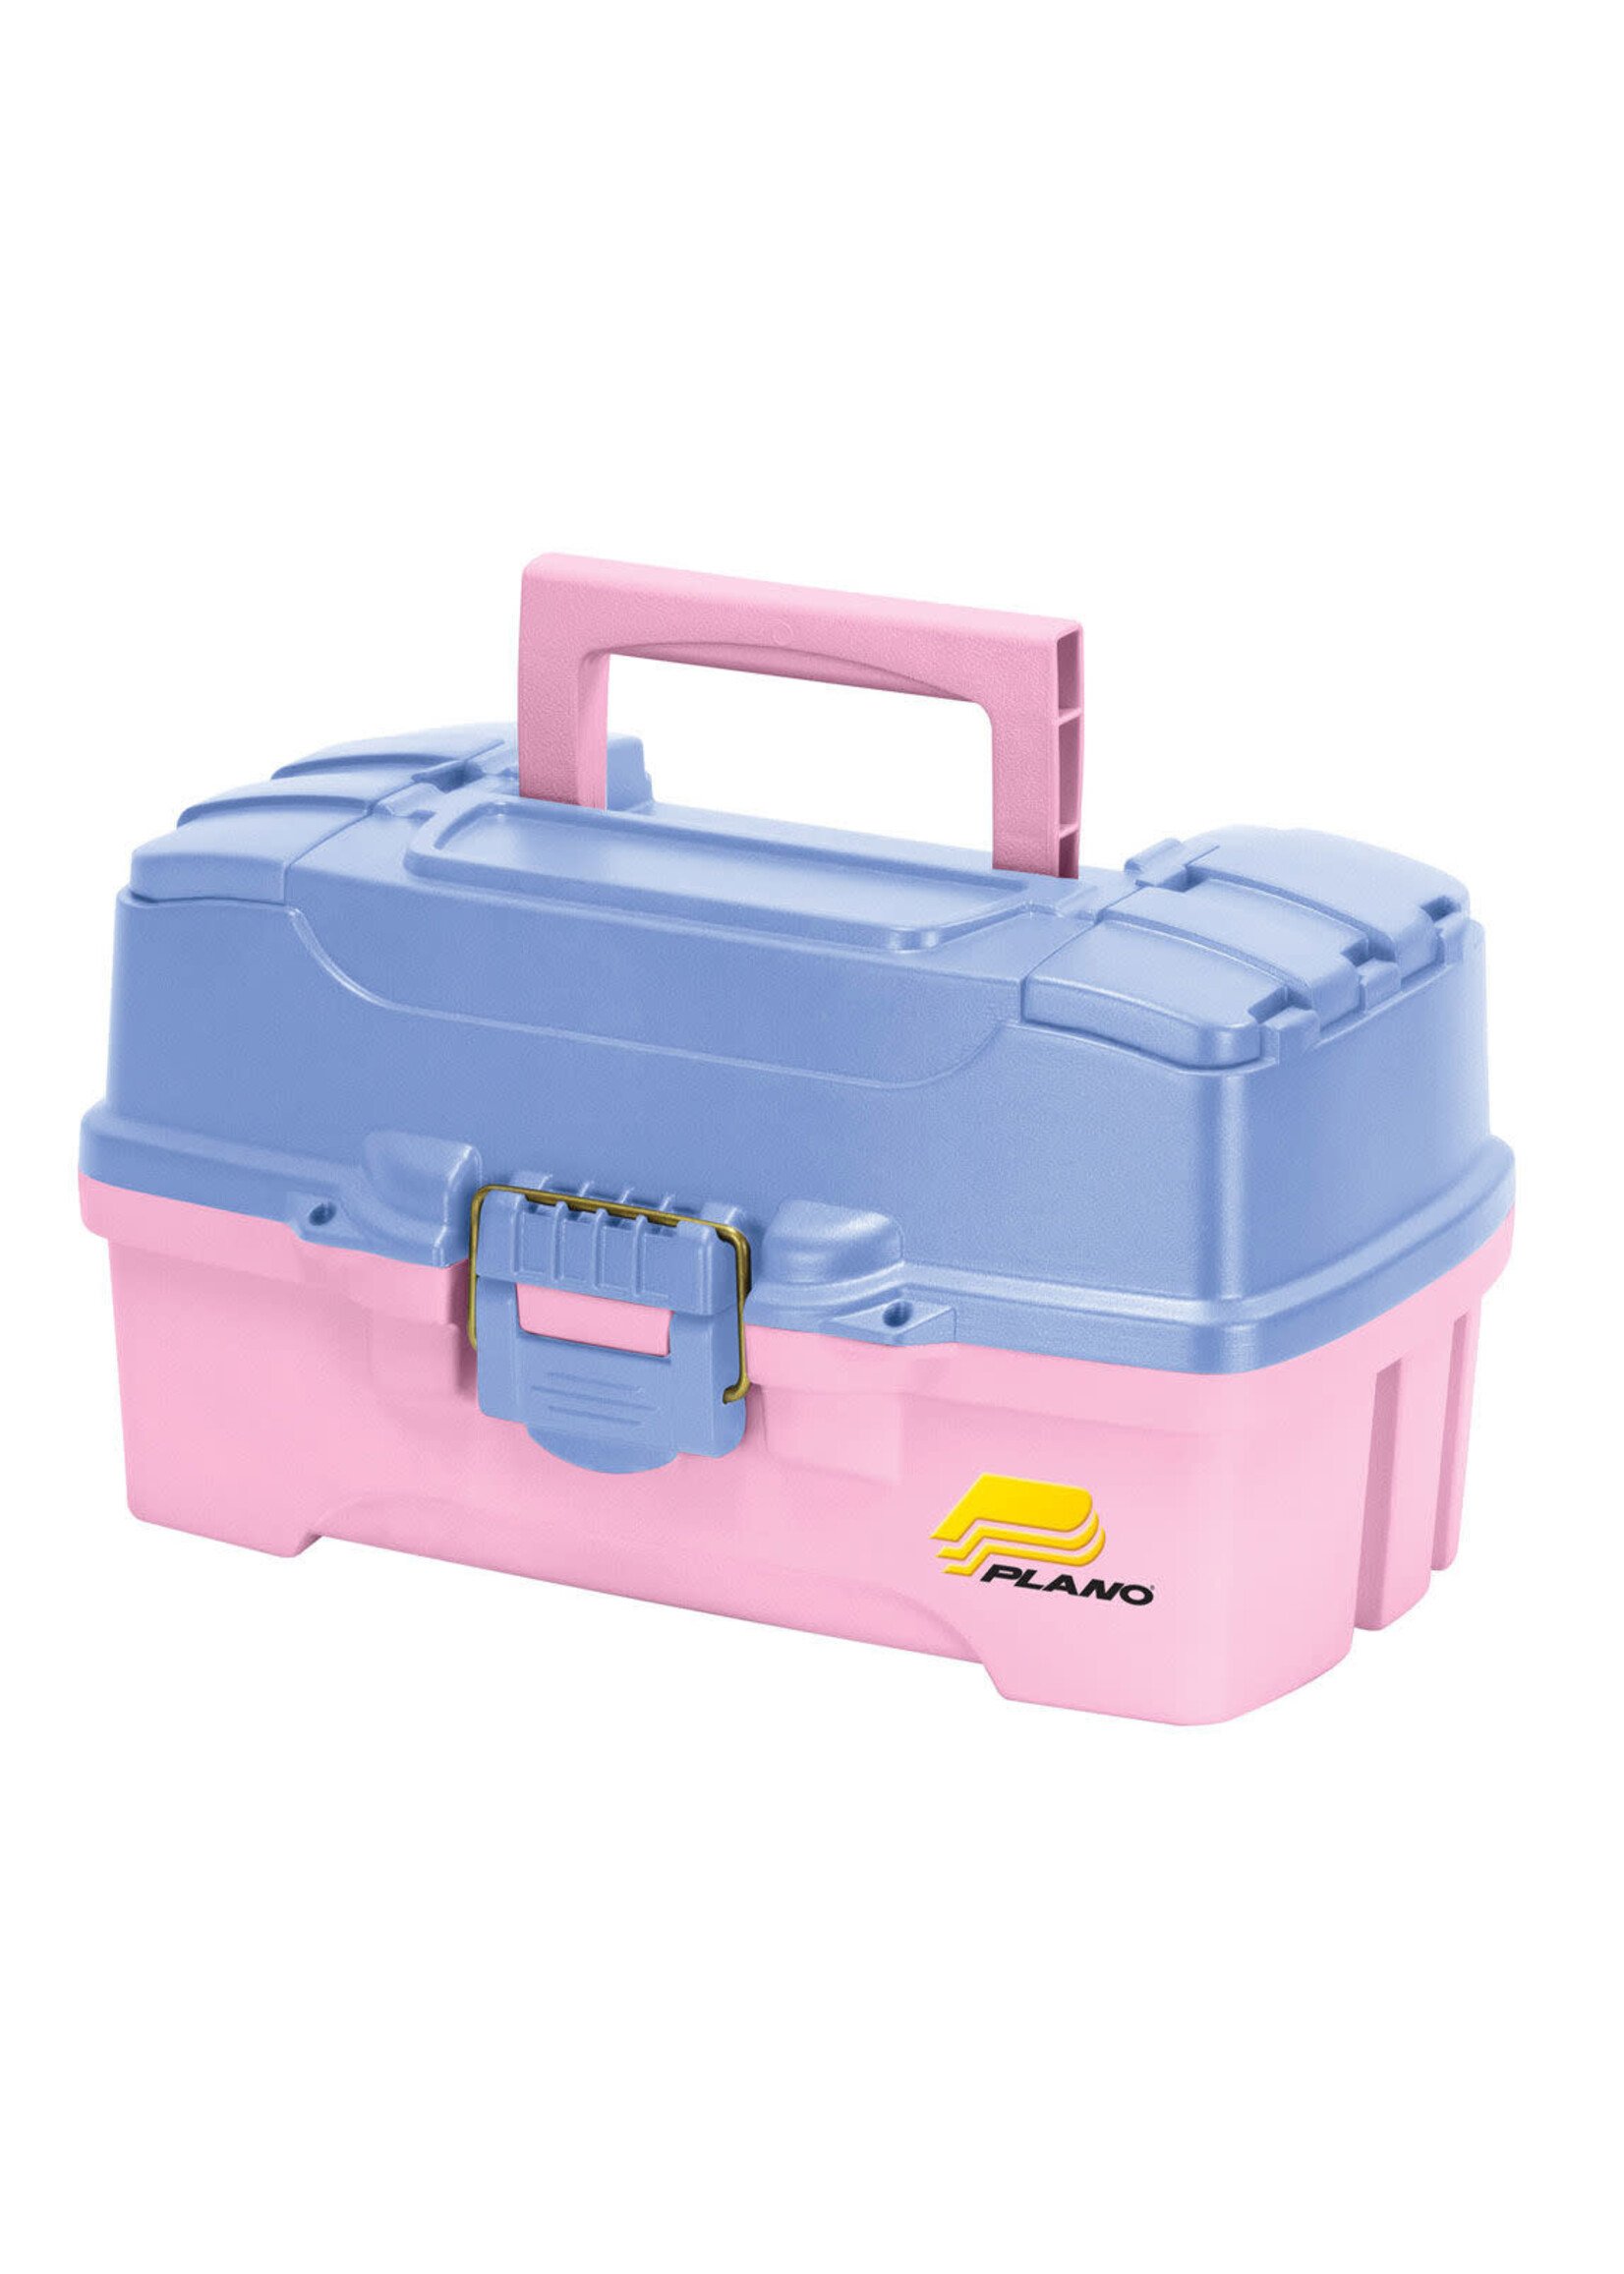 https://cdn.shoplightspeed.com/shops/626643/files/36257659/1652x2313x2/plano-plano-2-tray-tackle-box-pink.jpg